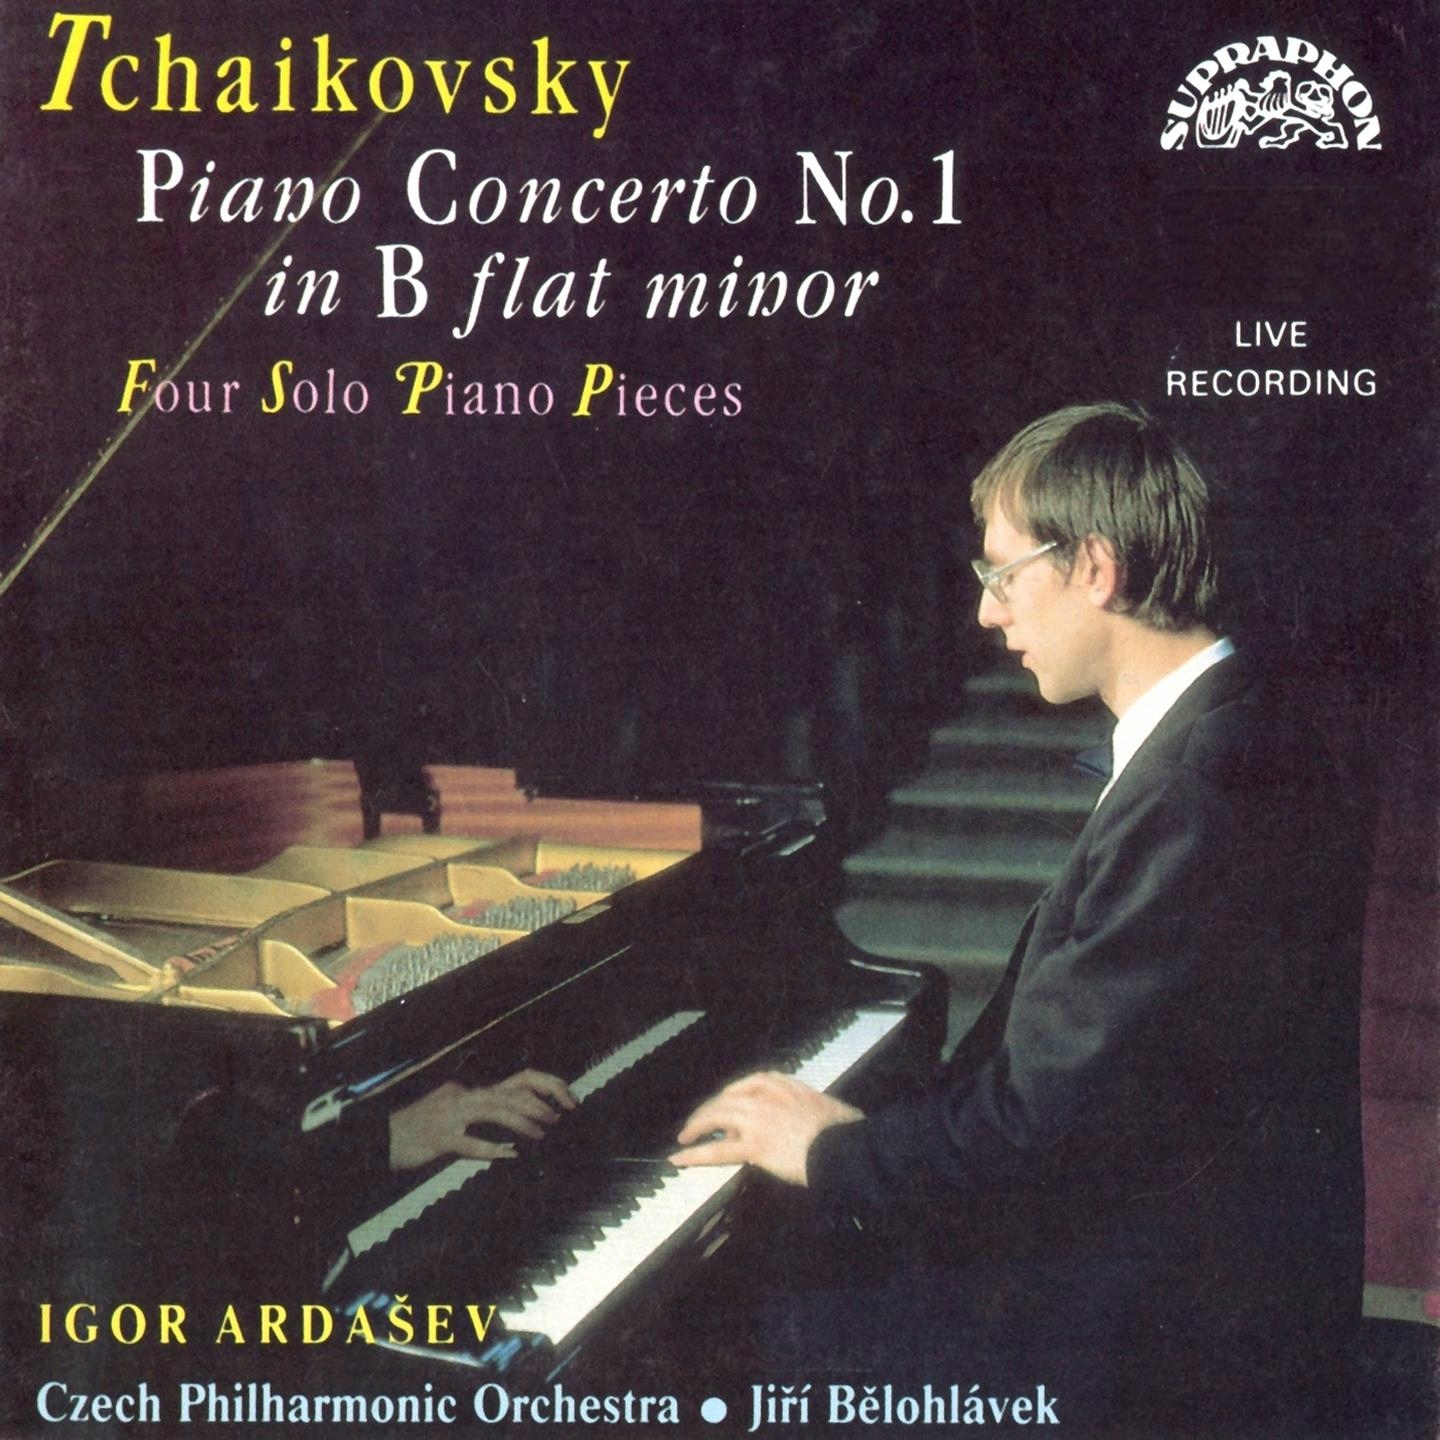 Tchaikovsky: Piano Concerto No. 1 and 4 Solo Piano Pieces (Live)